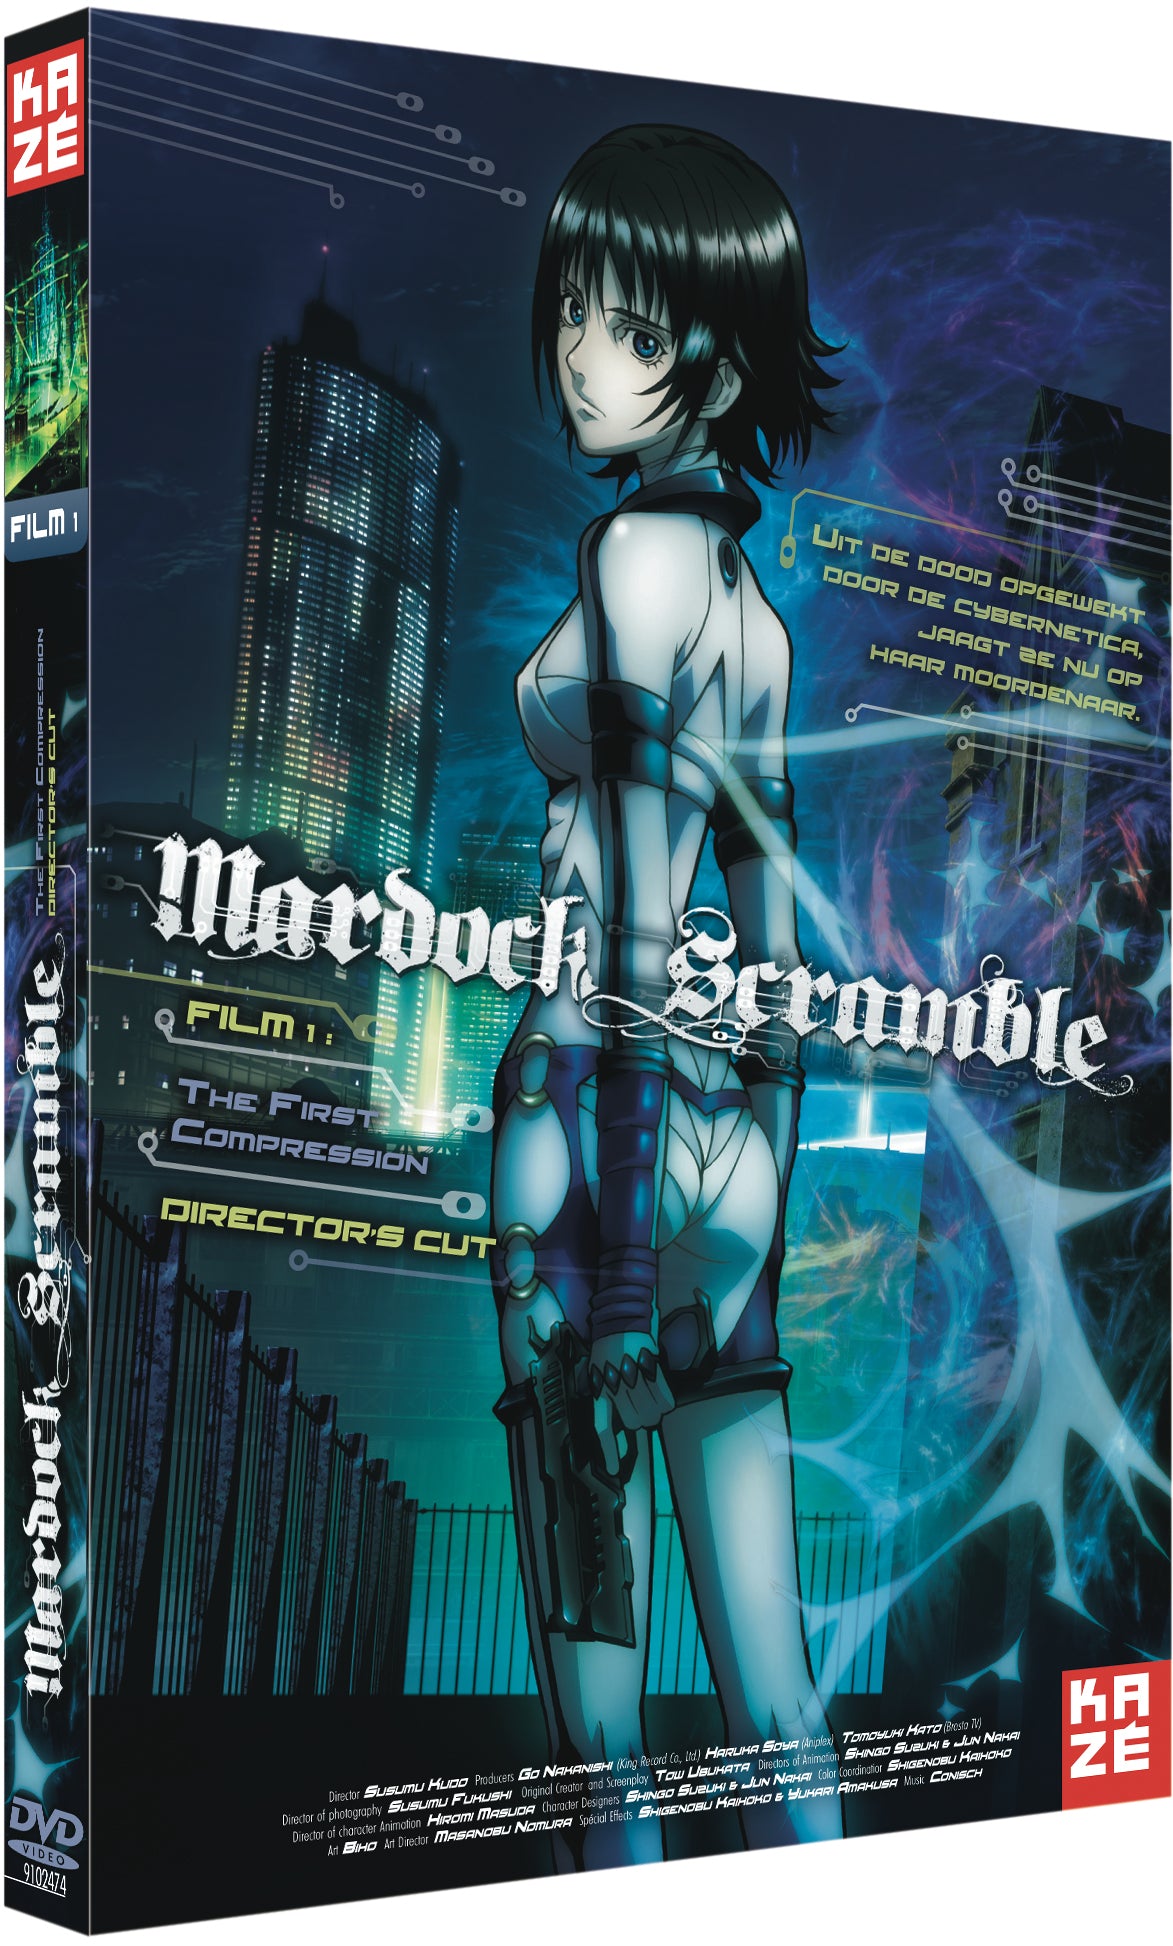 Mardock Scramble Film 1